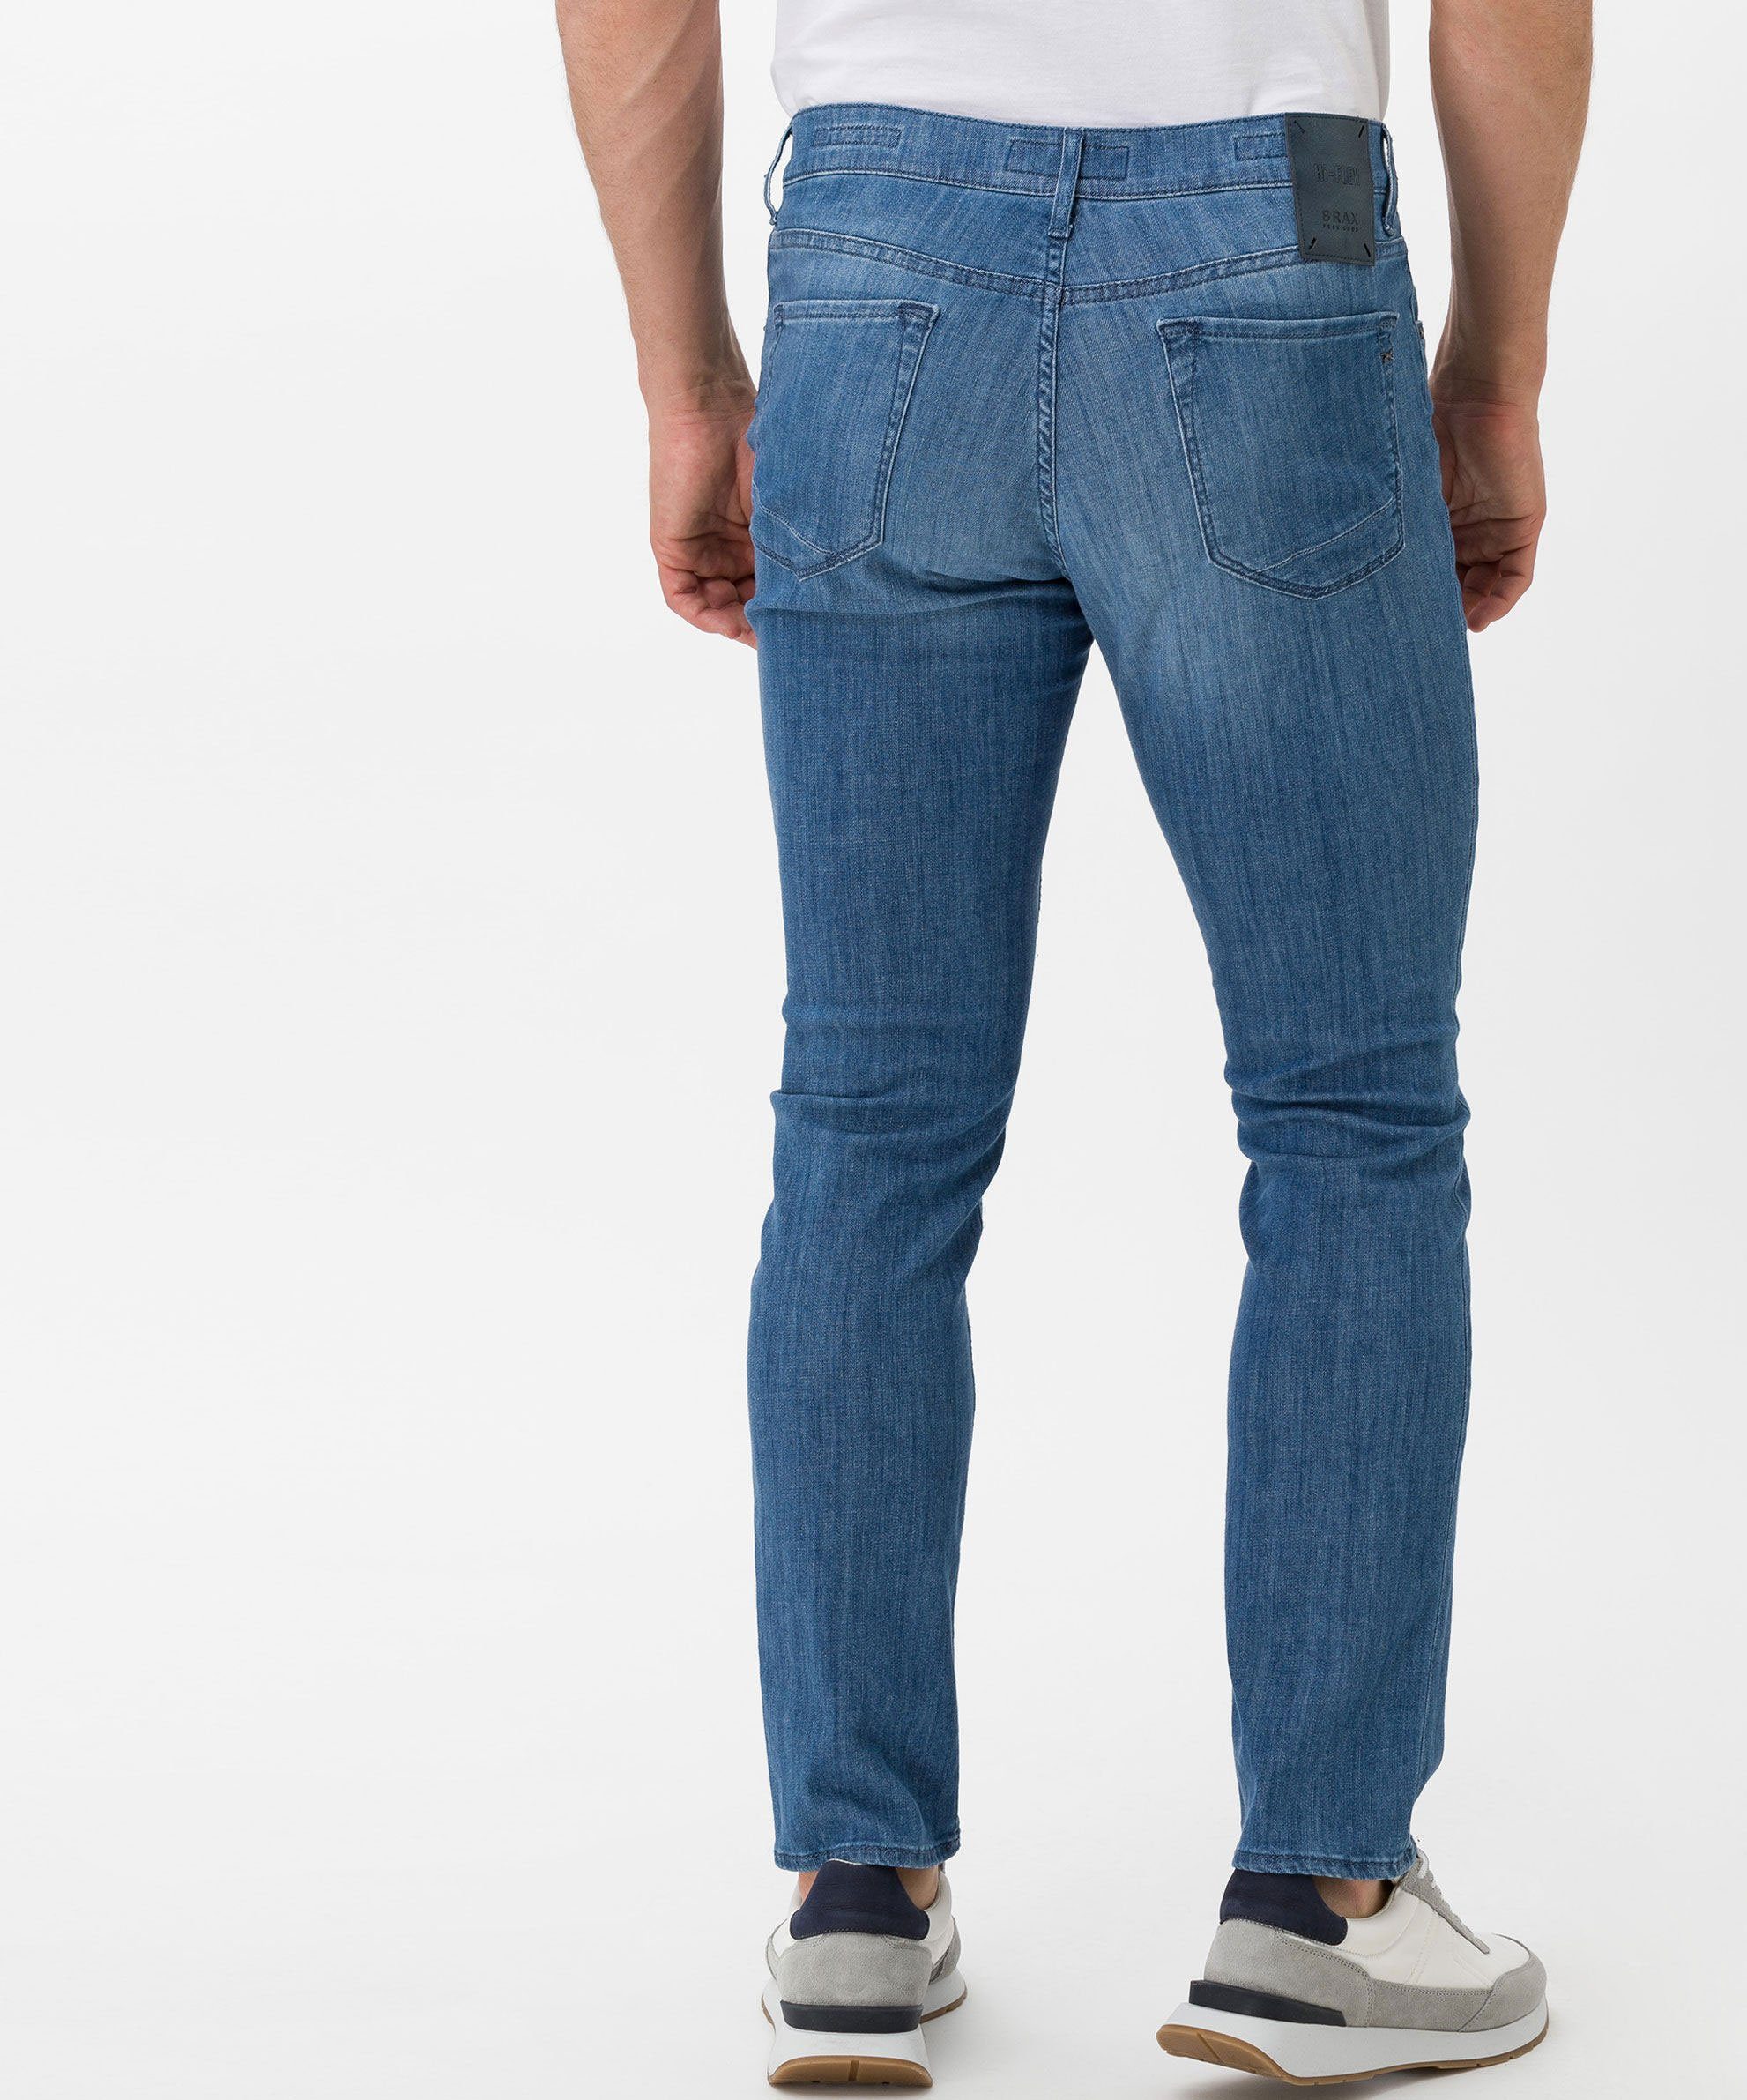 Brax 5-Pocket-Jeans light Sommerdenim softer Style CHUCK blue Hi-Flex LIGHT, used